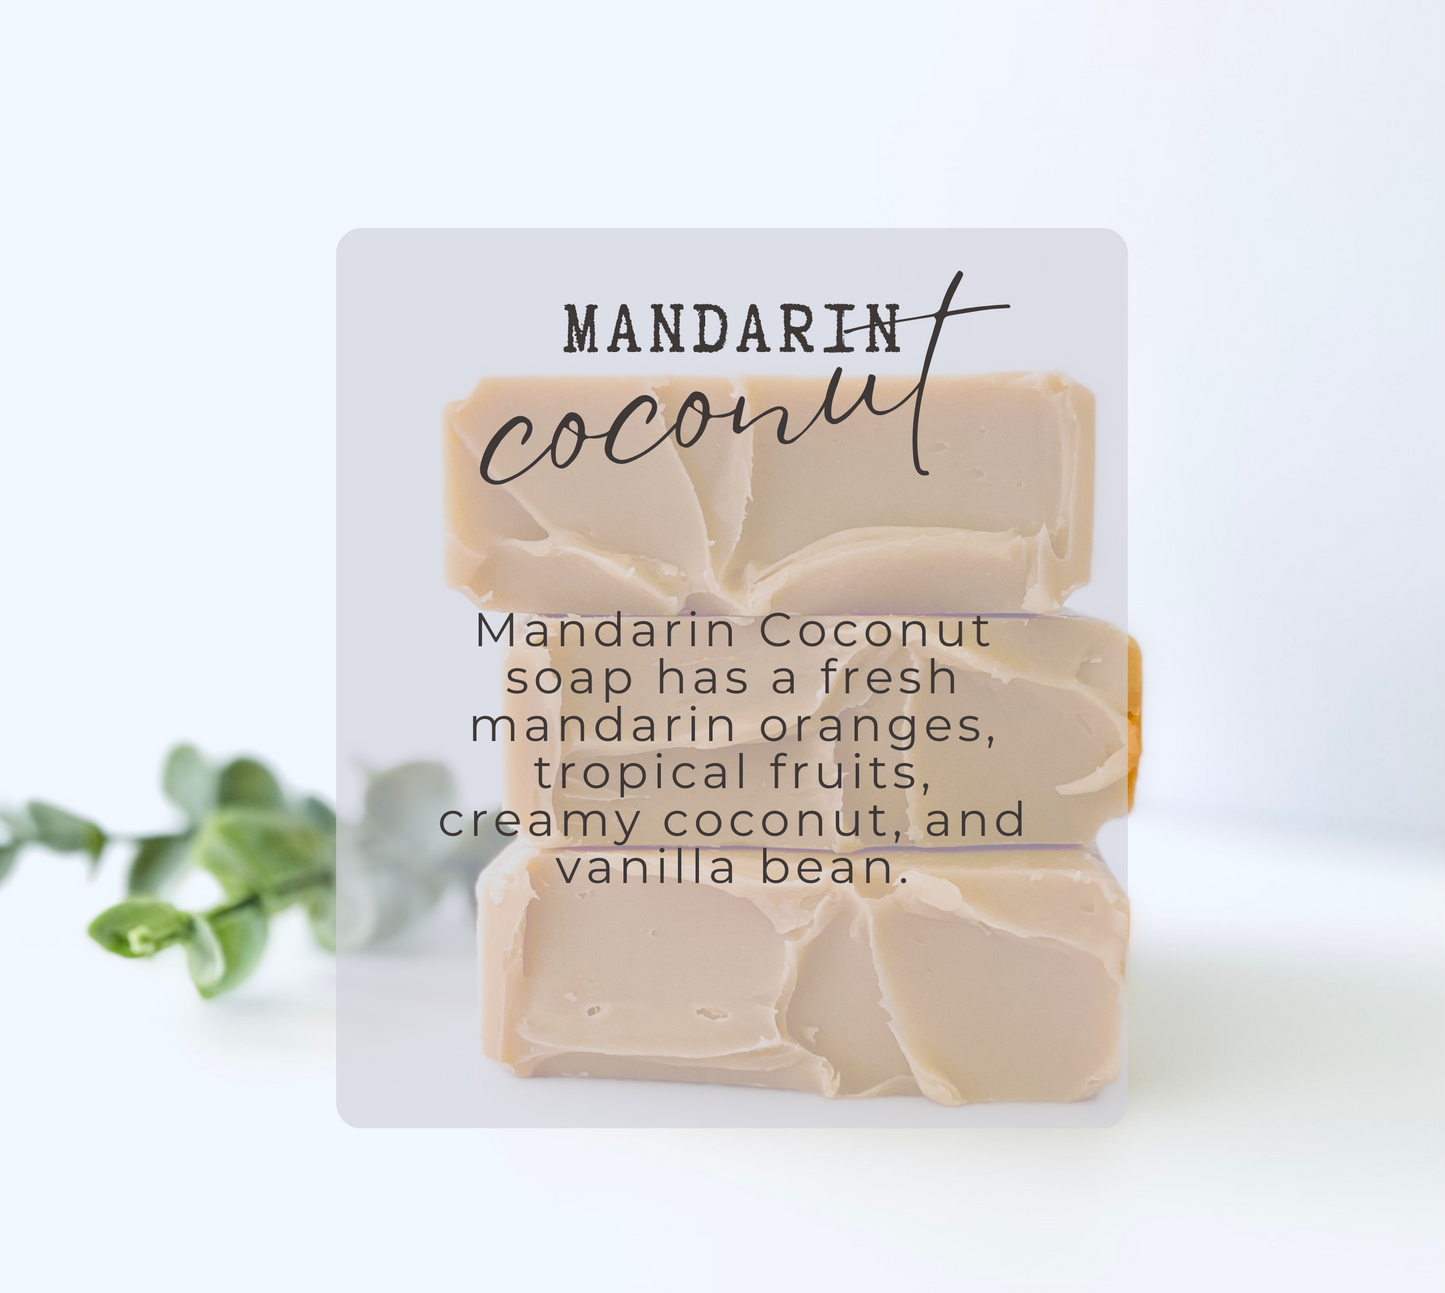 Mandarin Coconut soap has a fresh mandarin oranges, tropical fruits, creamy coconut, and vanilla bean. 